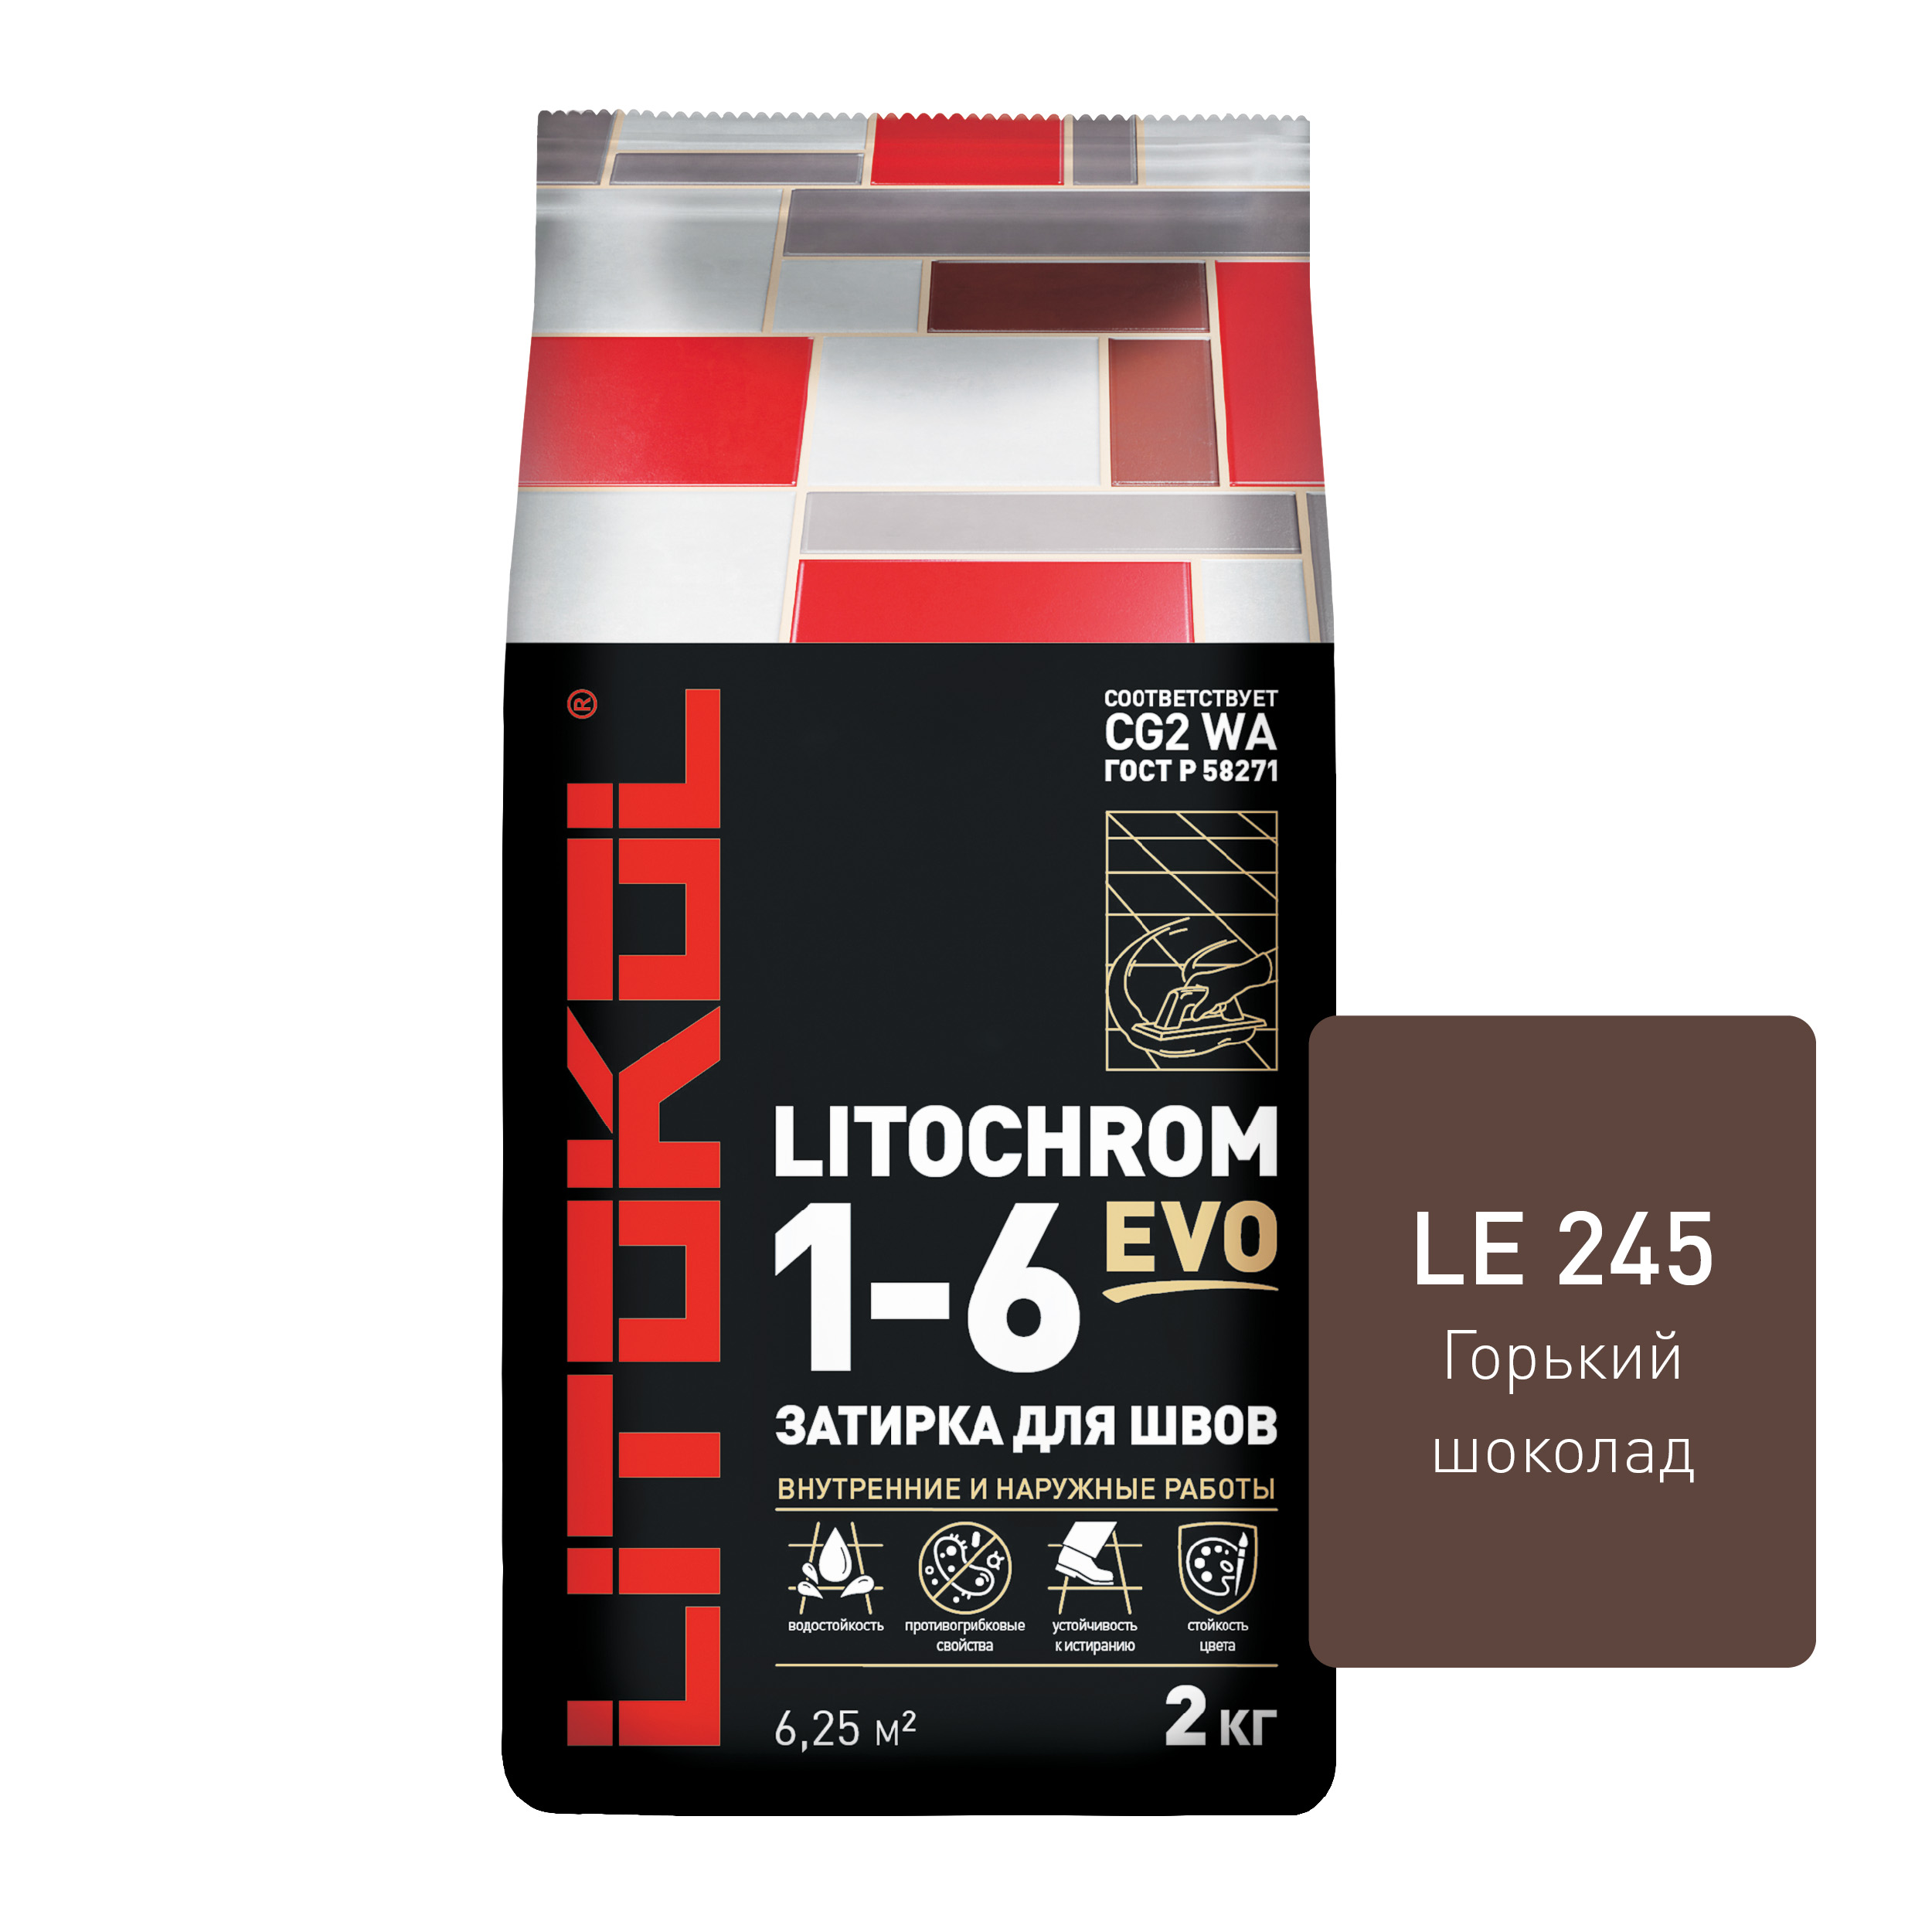 Цементная затирка LITOKOL LITOCHROM 1-6 EVO LE.245 Горький шоколад, 2 кг затирка цементная ceresit ce 33 41 натура 2 кг